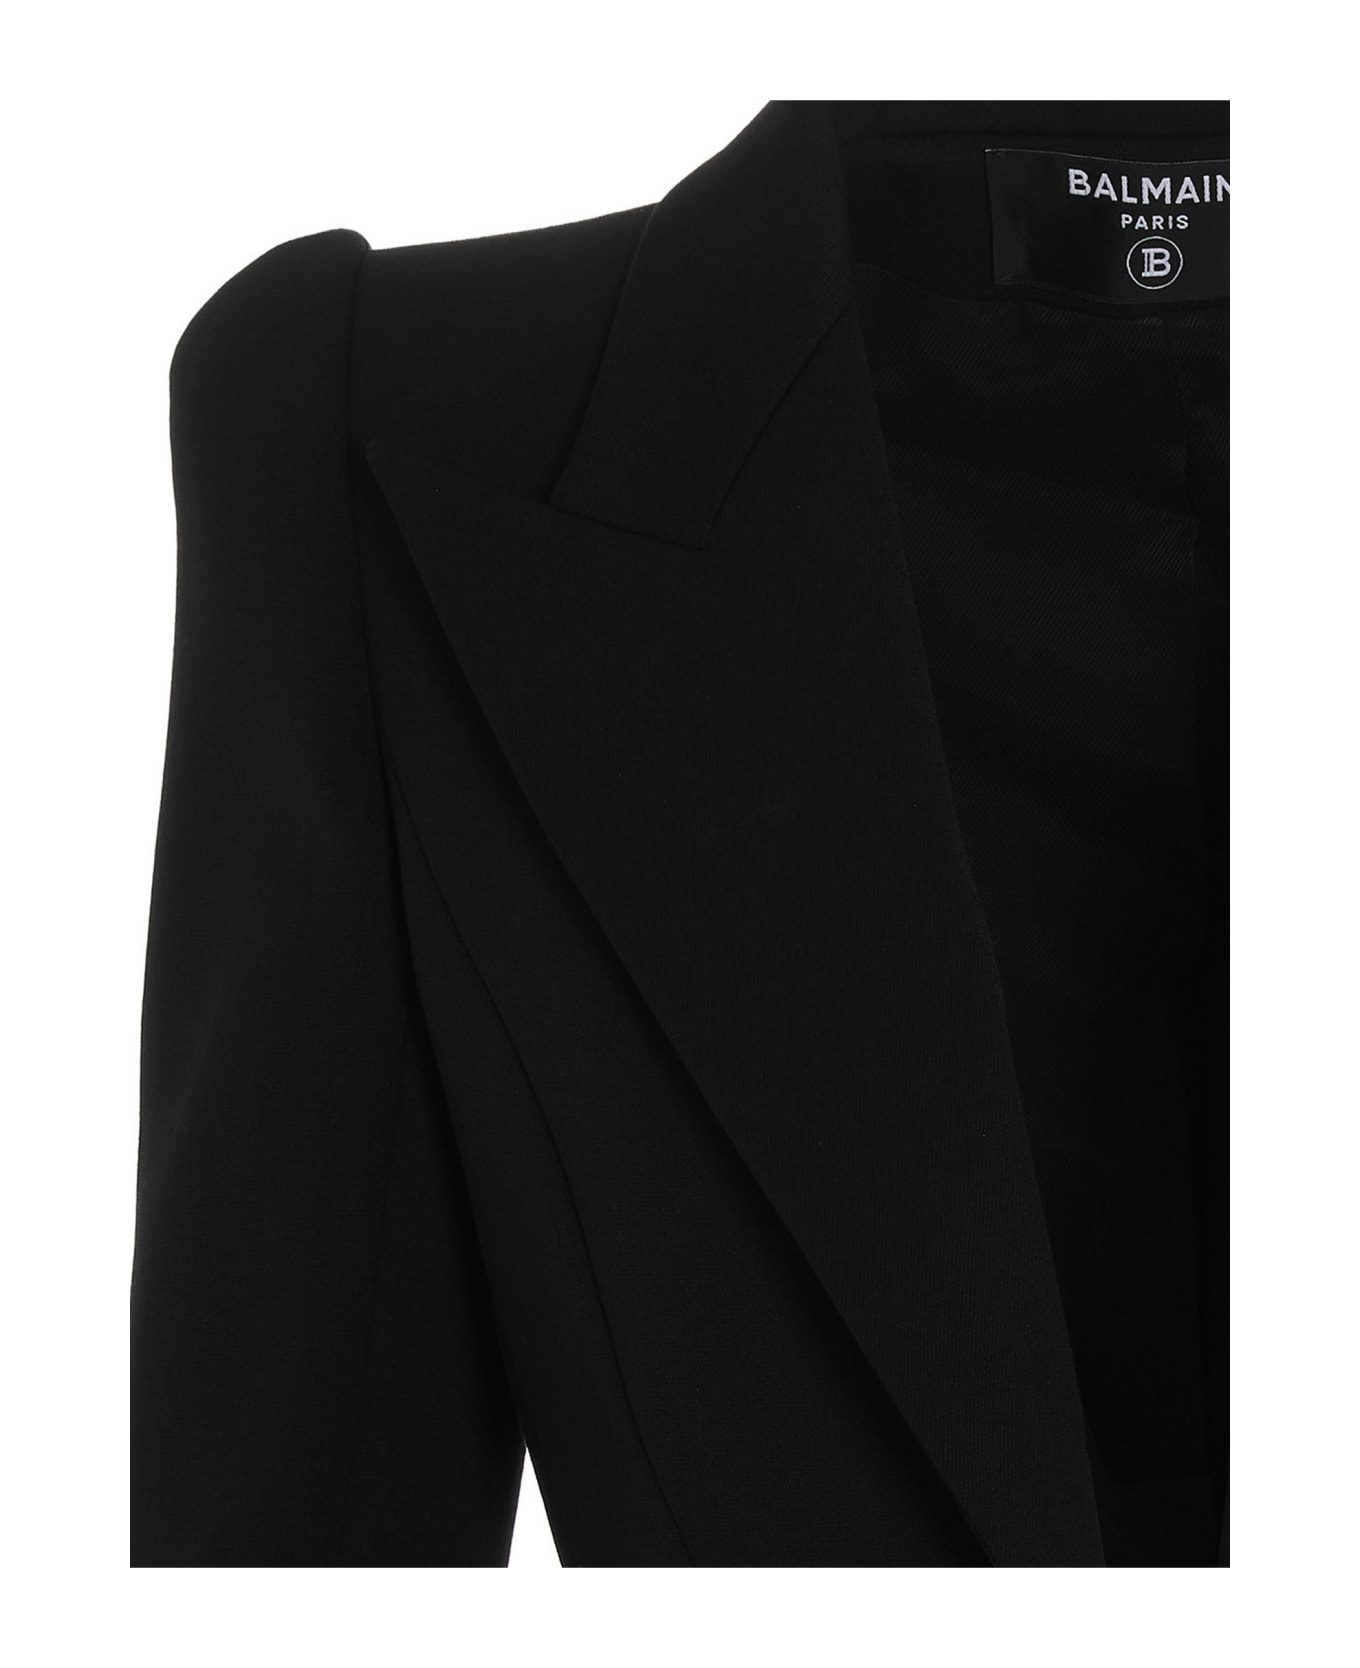 Balmain Single-breasted Blazer Jacket - Black  